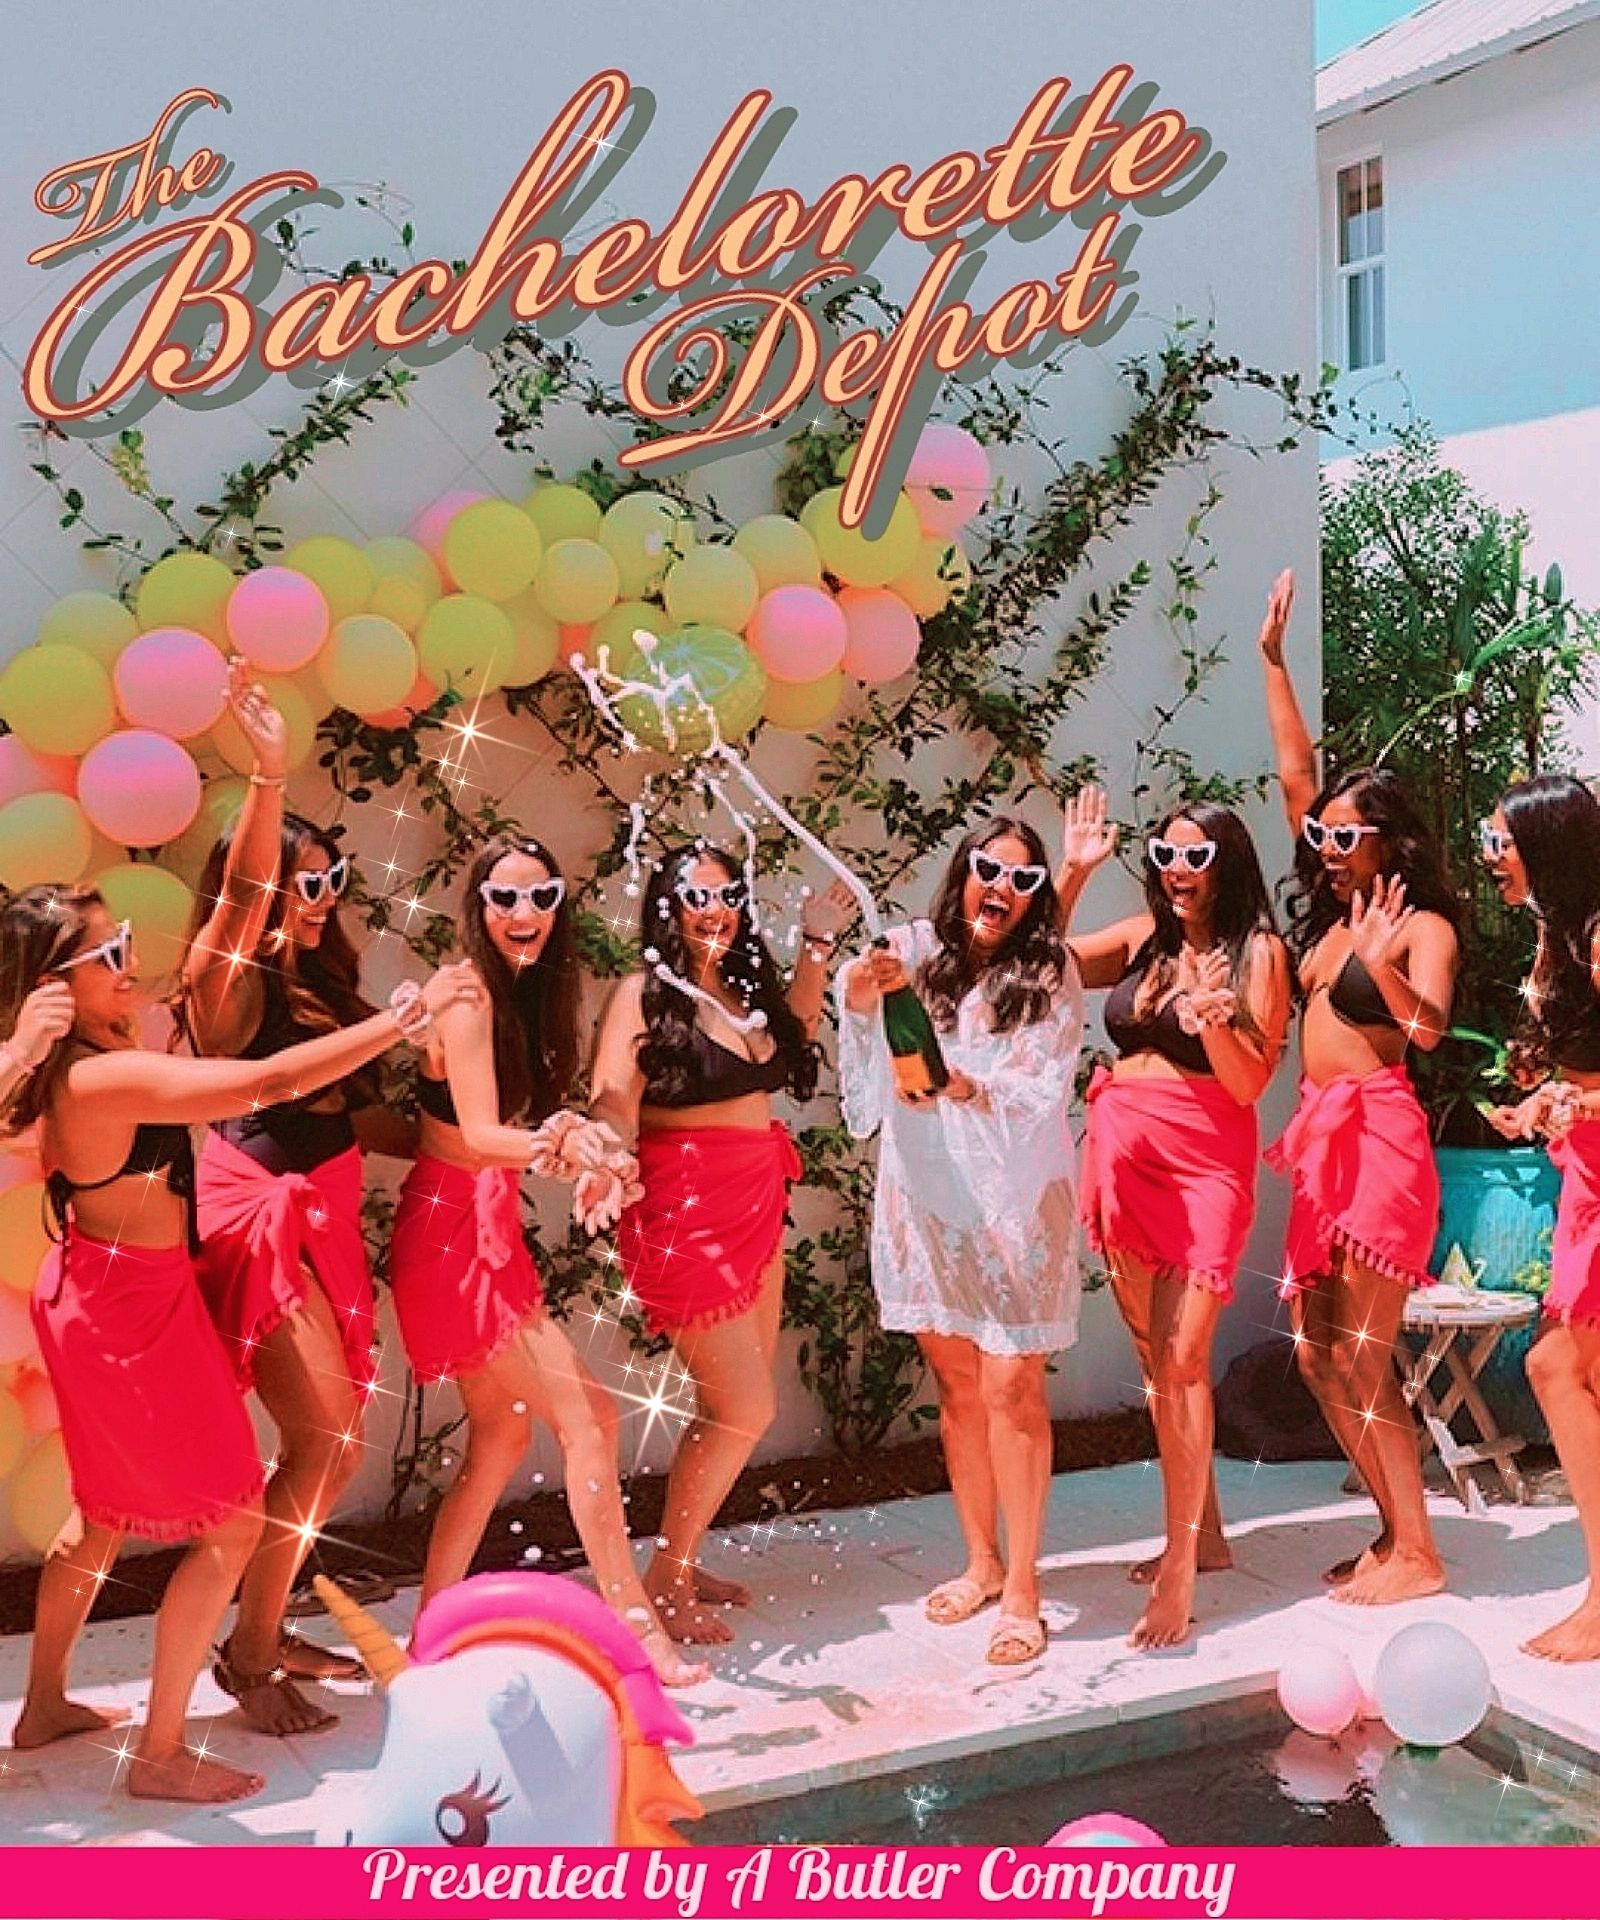 Scottsdale bachelorette party, Miami bachelorette party, vegas bachelorette party